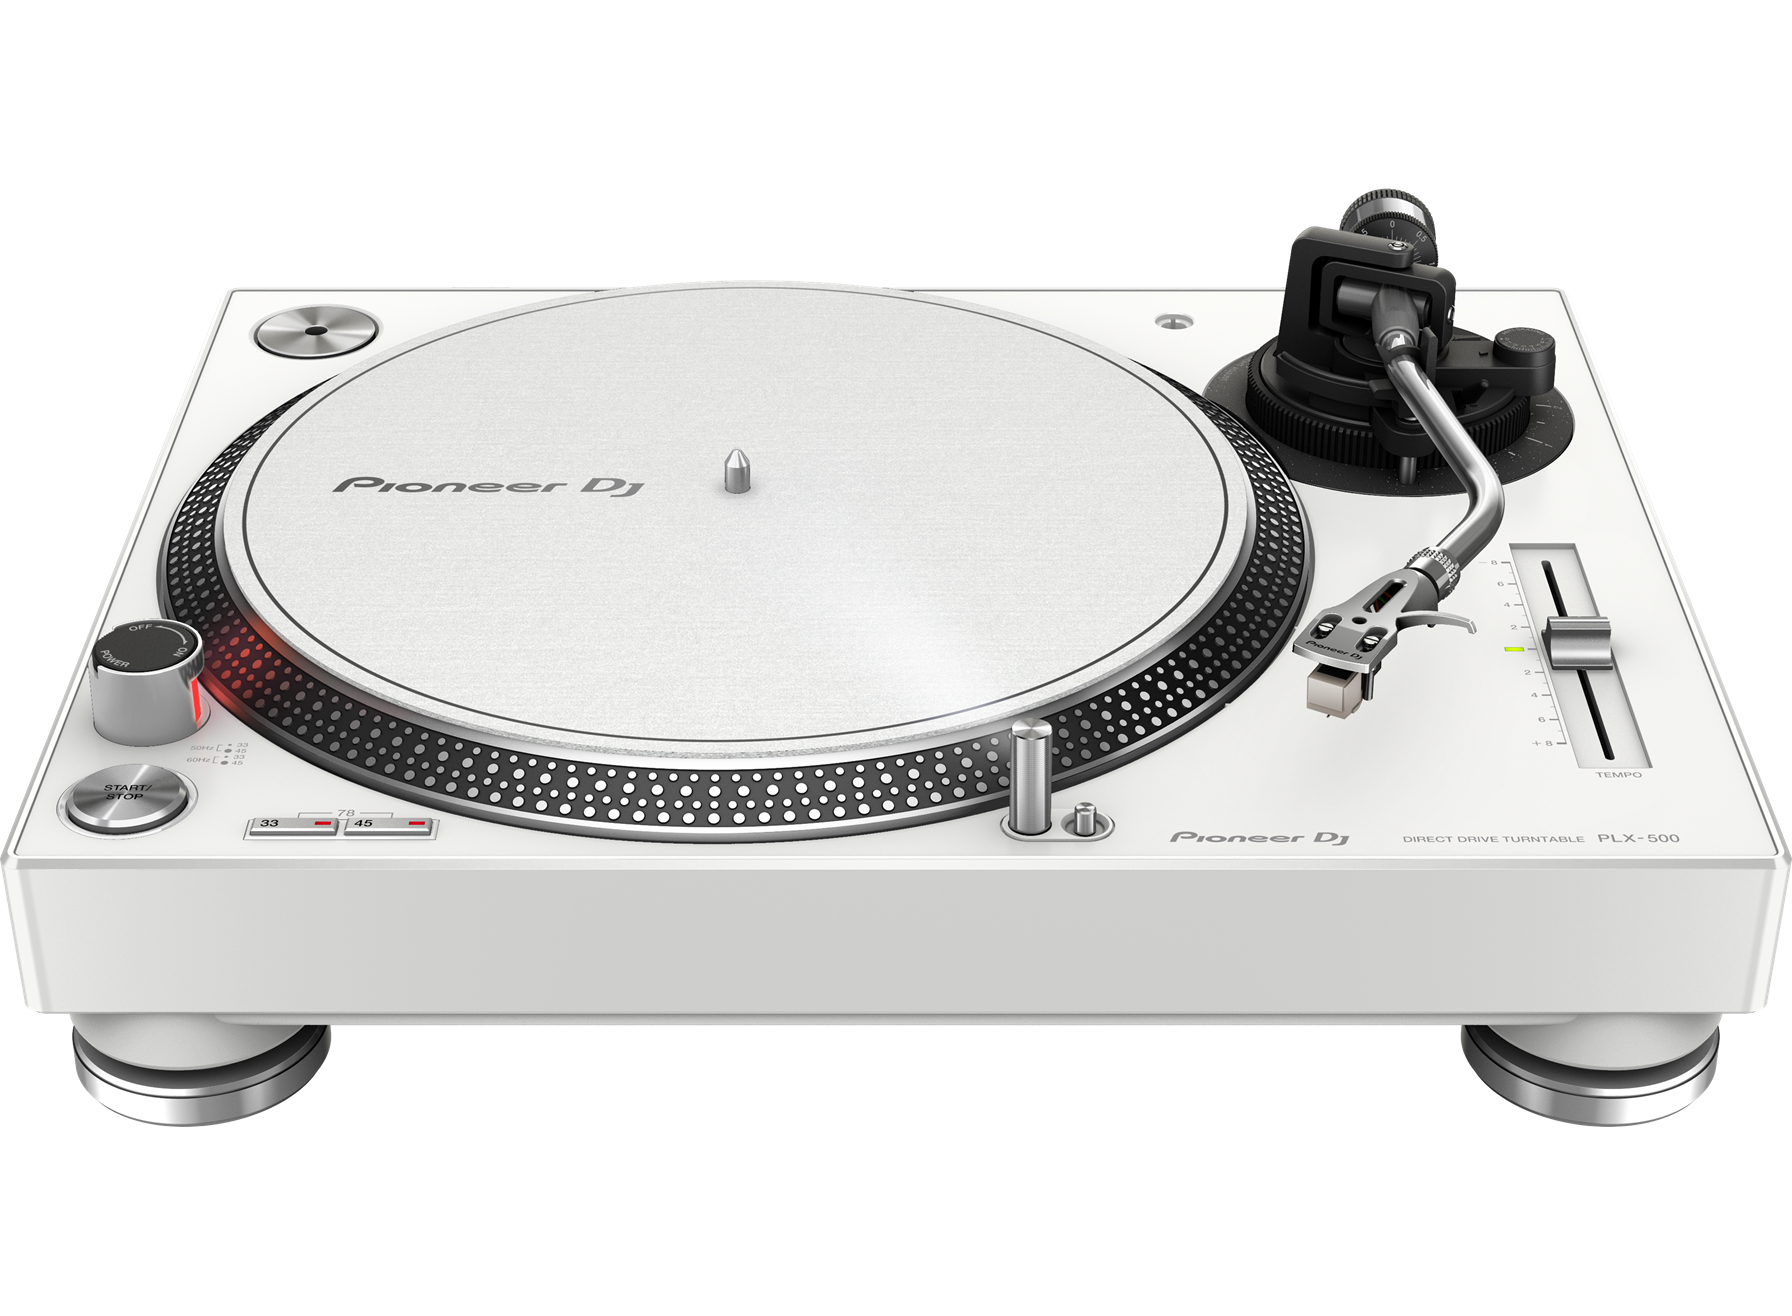 PLX-500-W ダイレクトドライブターンテーブル (white) - Pioneer DJ